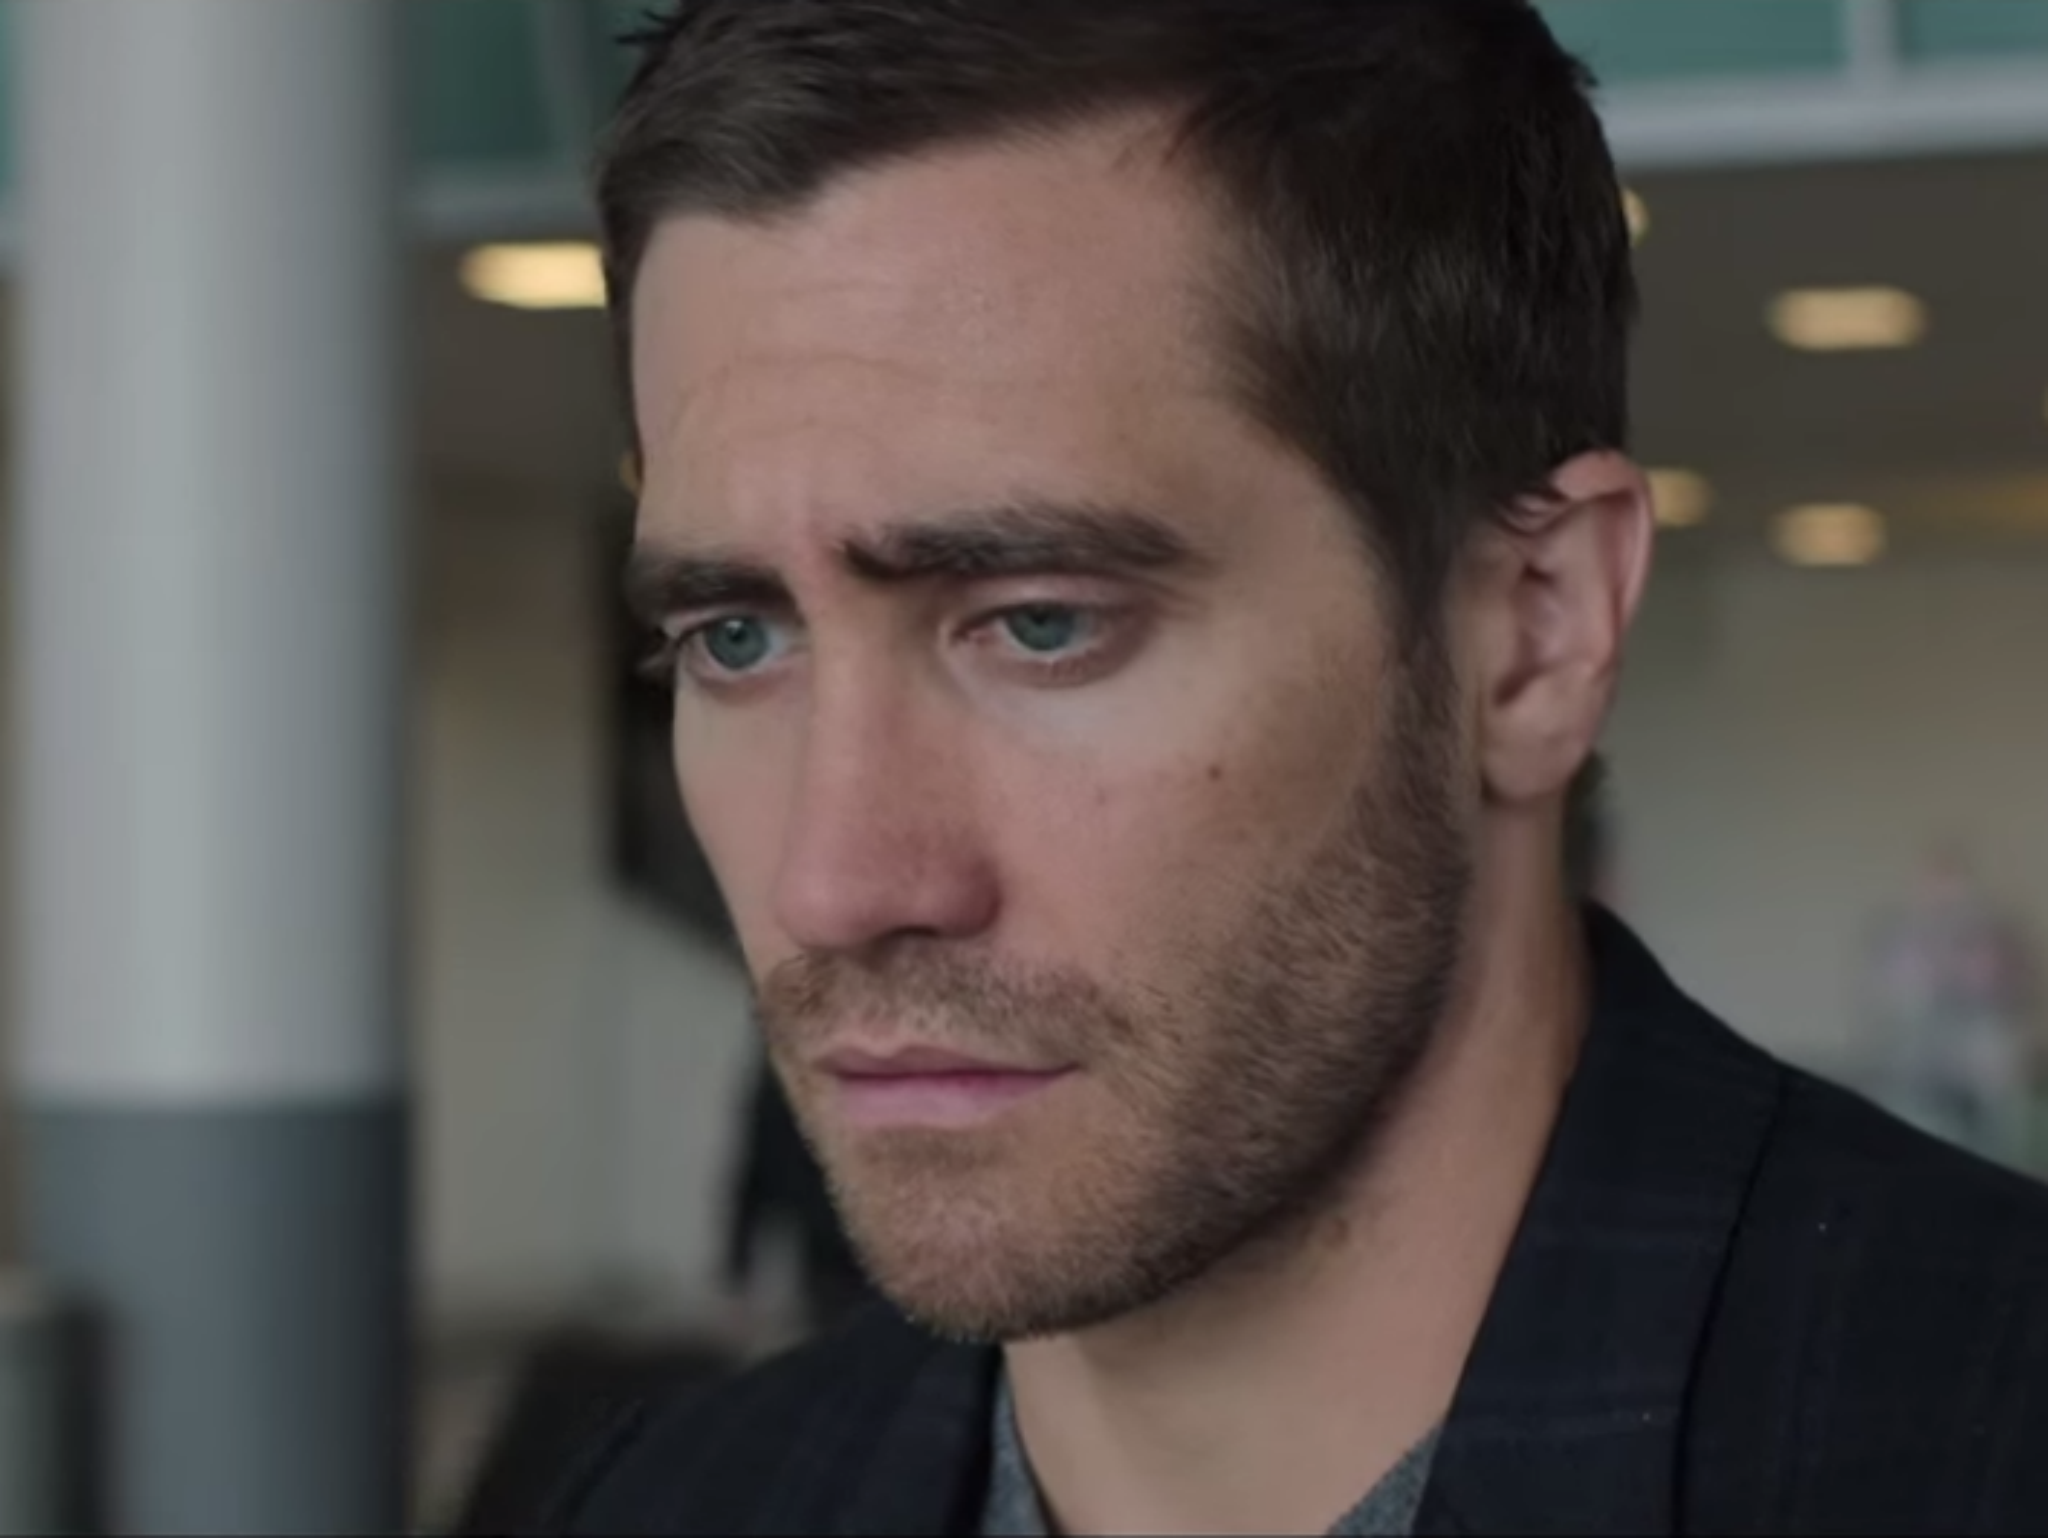 Jake Gyllenhaal stars in Dallas Buyers Club director Jean-Marc Vallée's new film Demolition